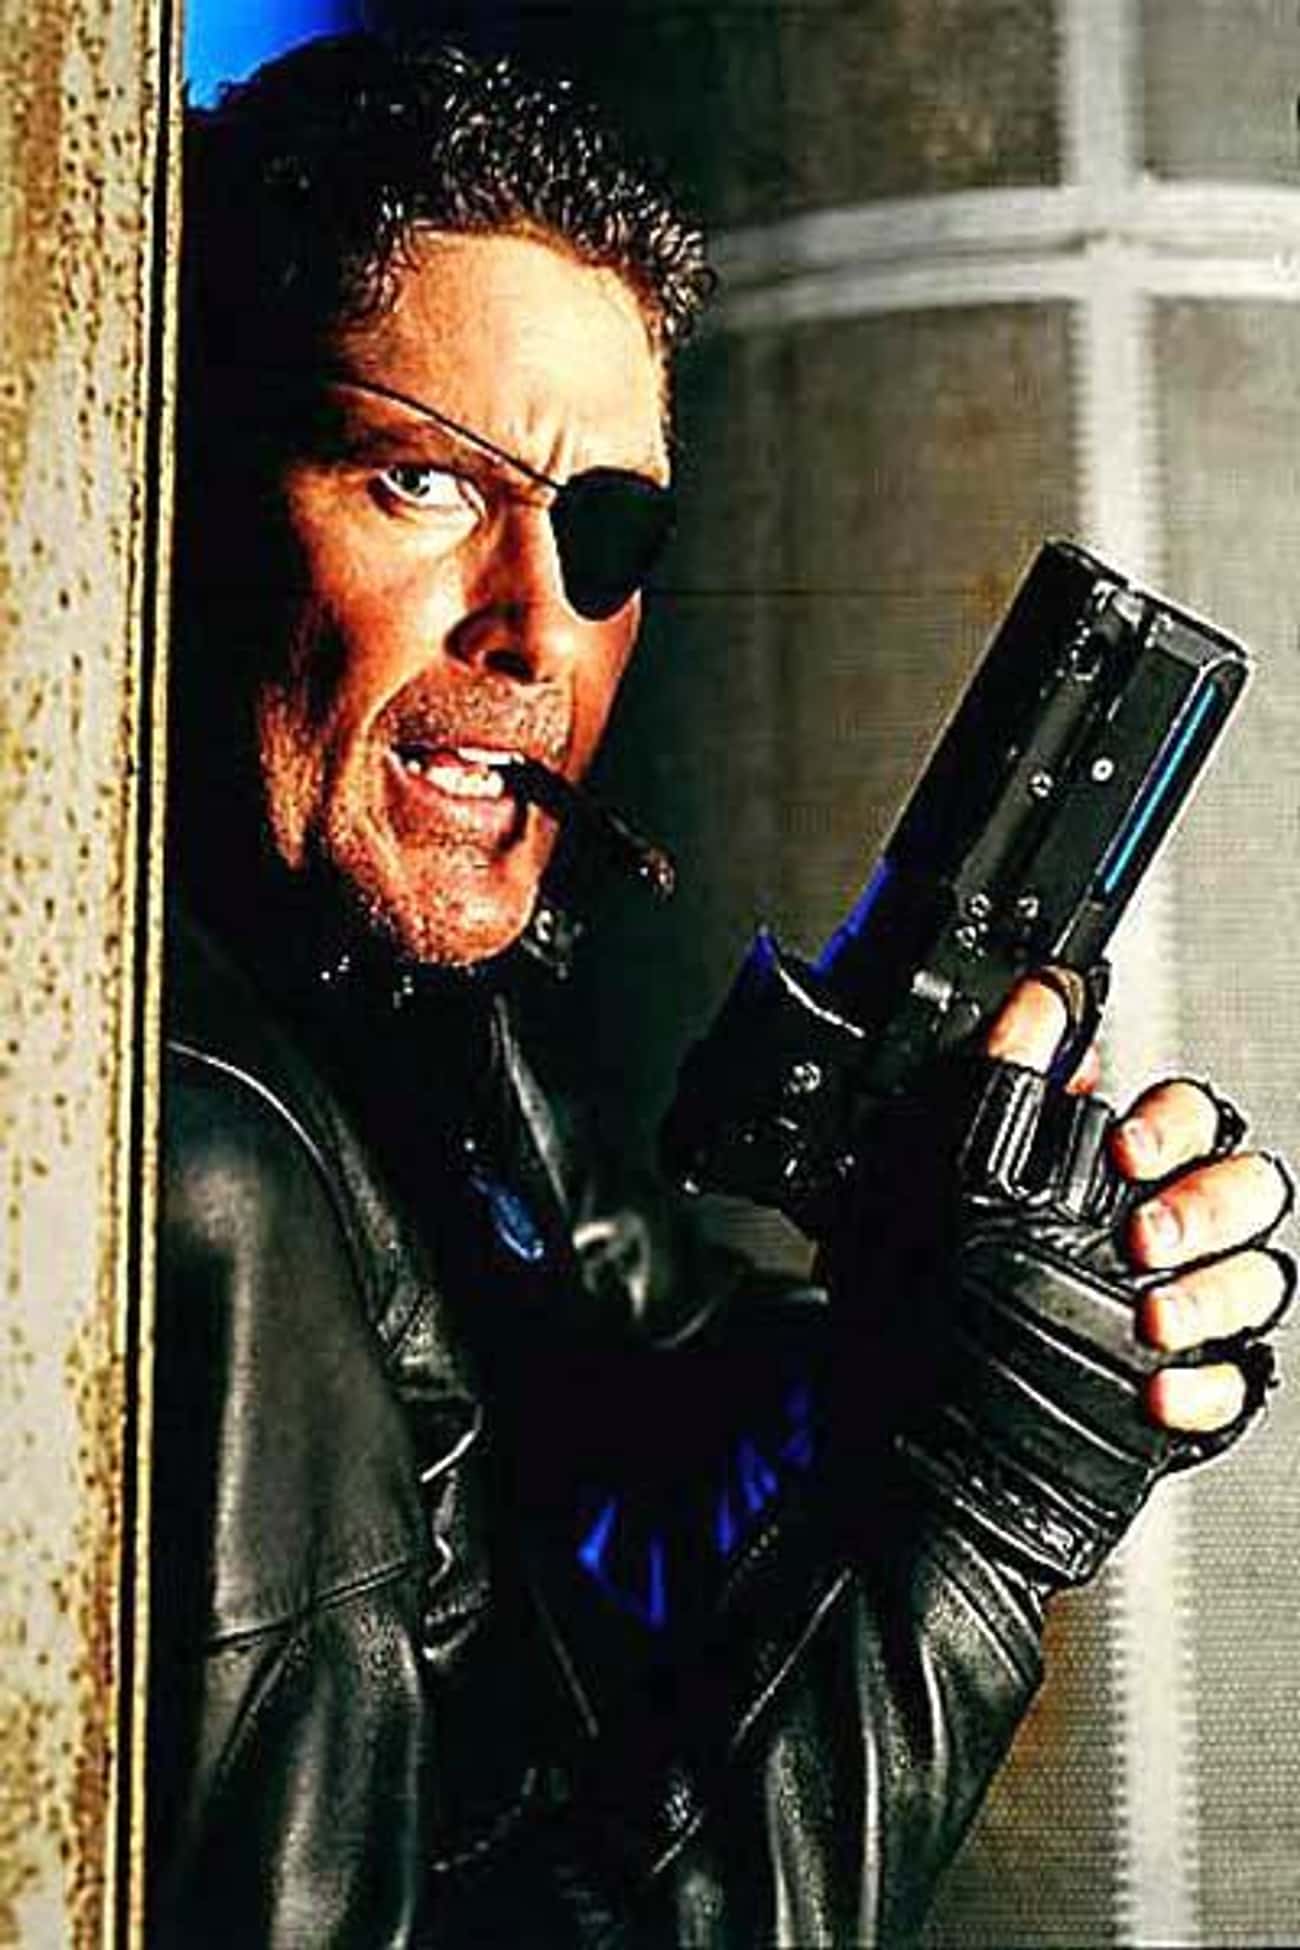 David Hasselhoff in "Nick Fury: Agent of S.H.I.E.L.D."